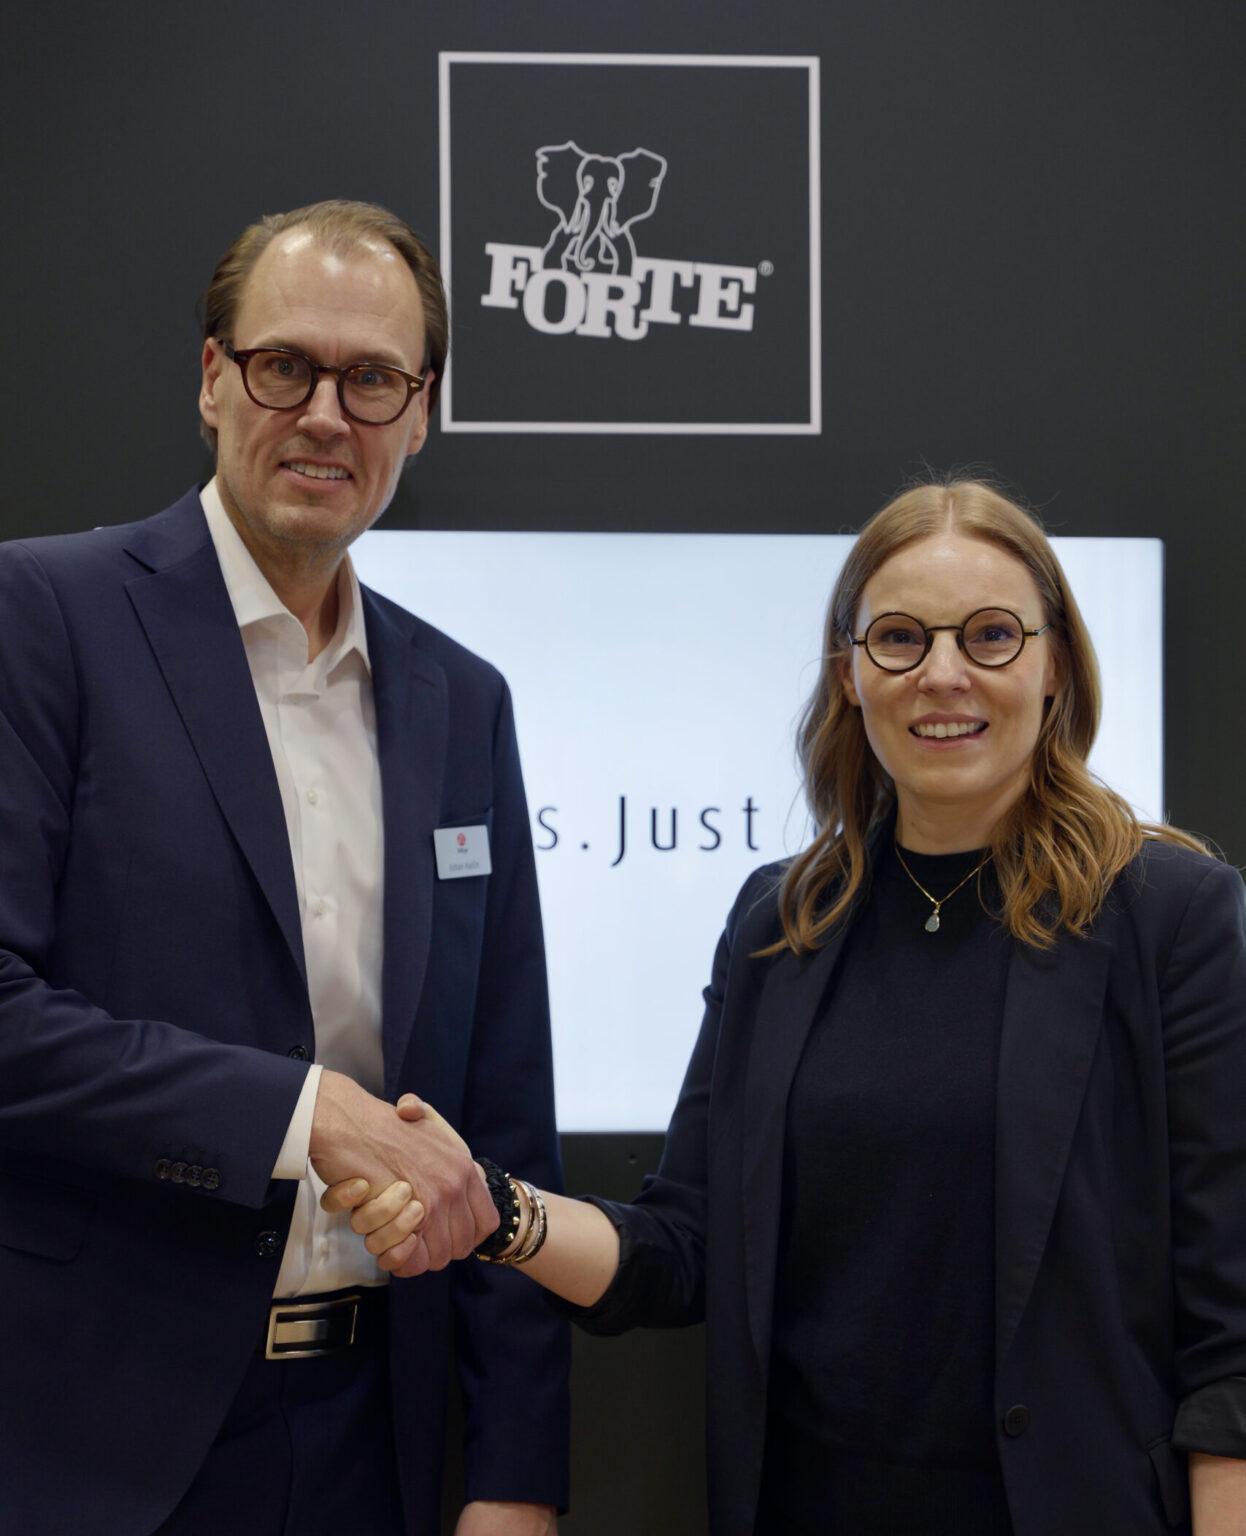 FORTE signs agreement to use Threespine ID - Välinge Innovation